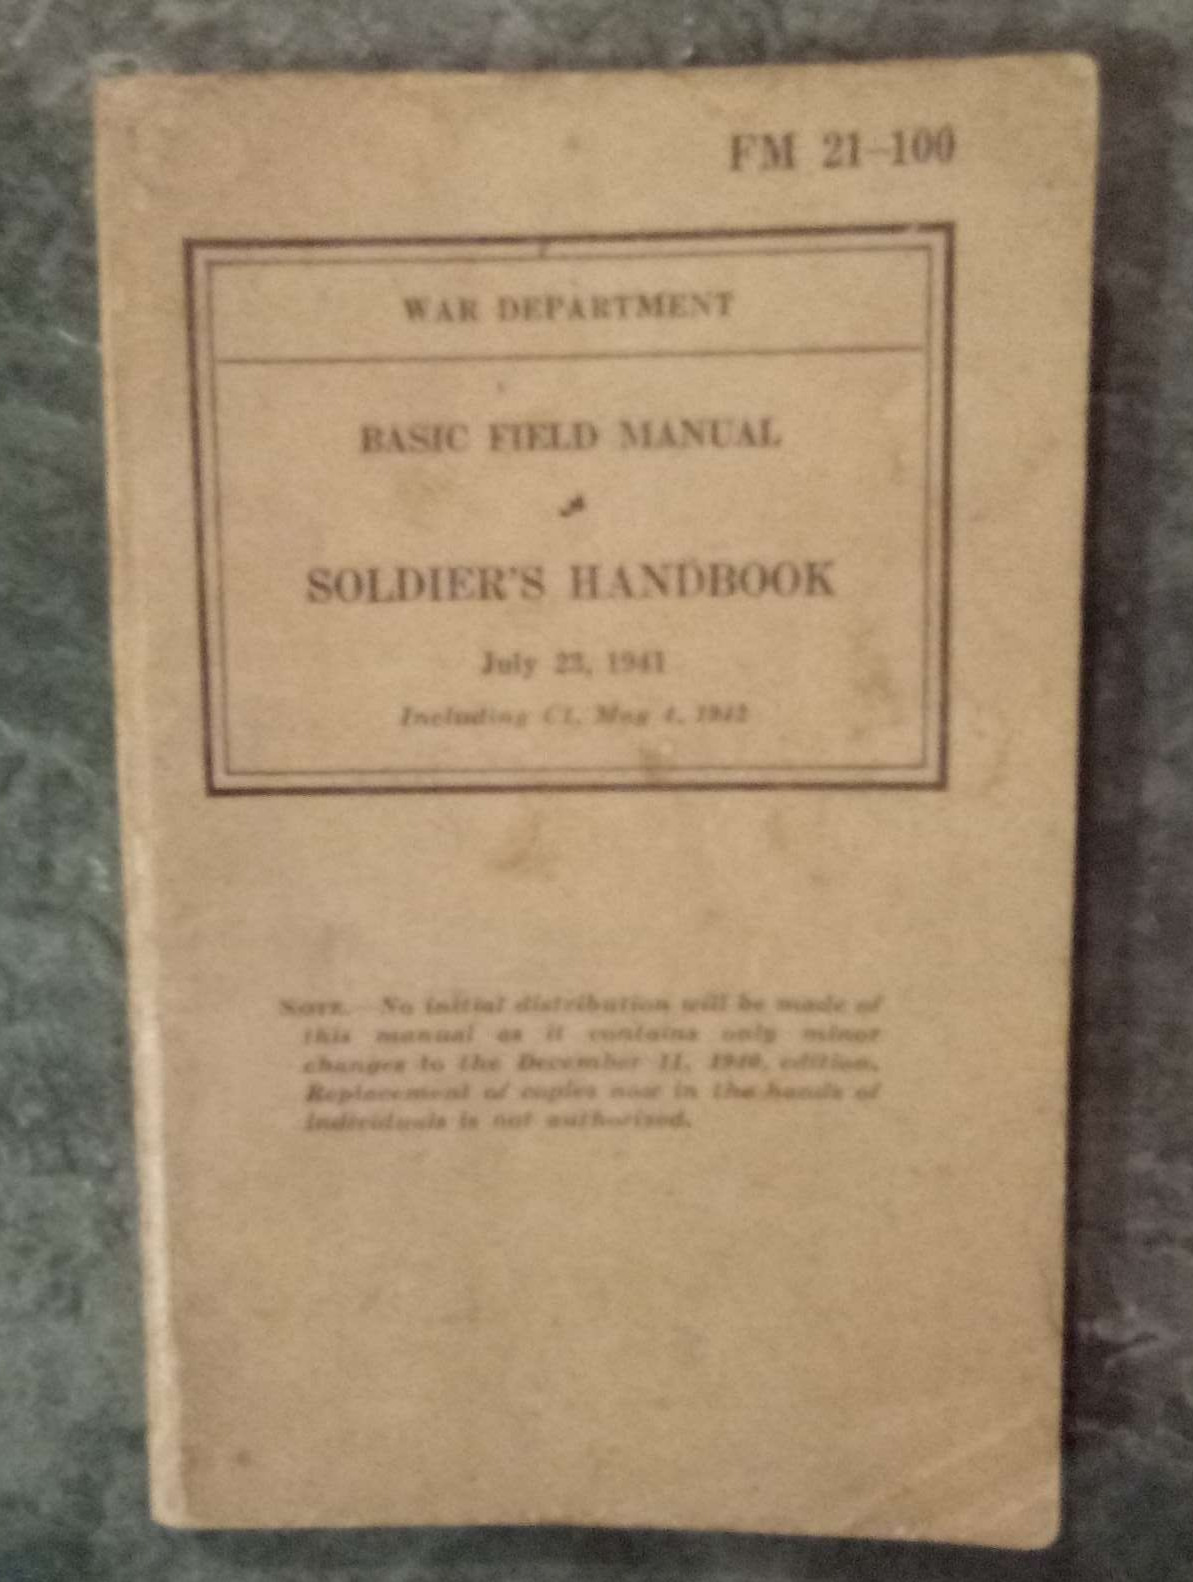 War Department Basic Field Manual Soldiers Handbook WW2 World War 2 July 1943